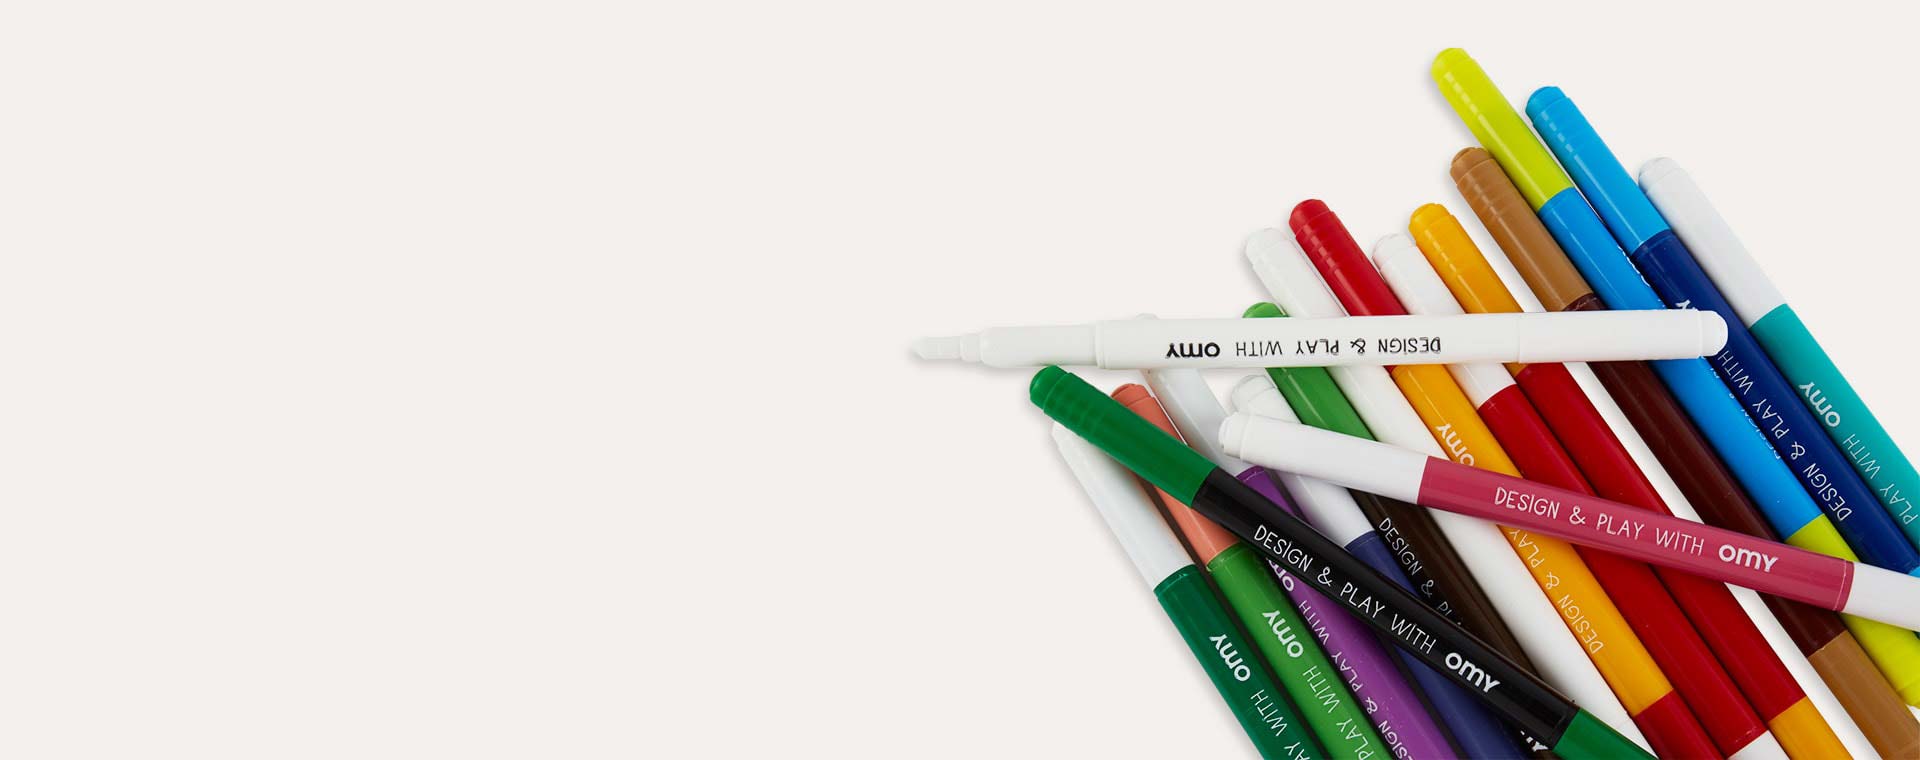 Multi OMY Design & Play Magic Colouring Pens